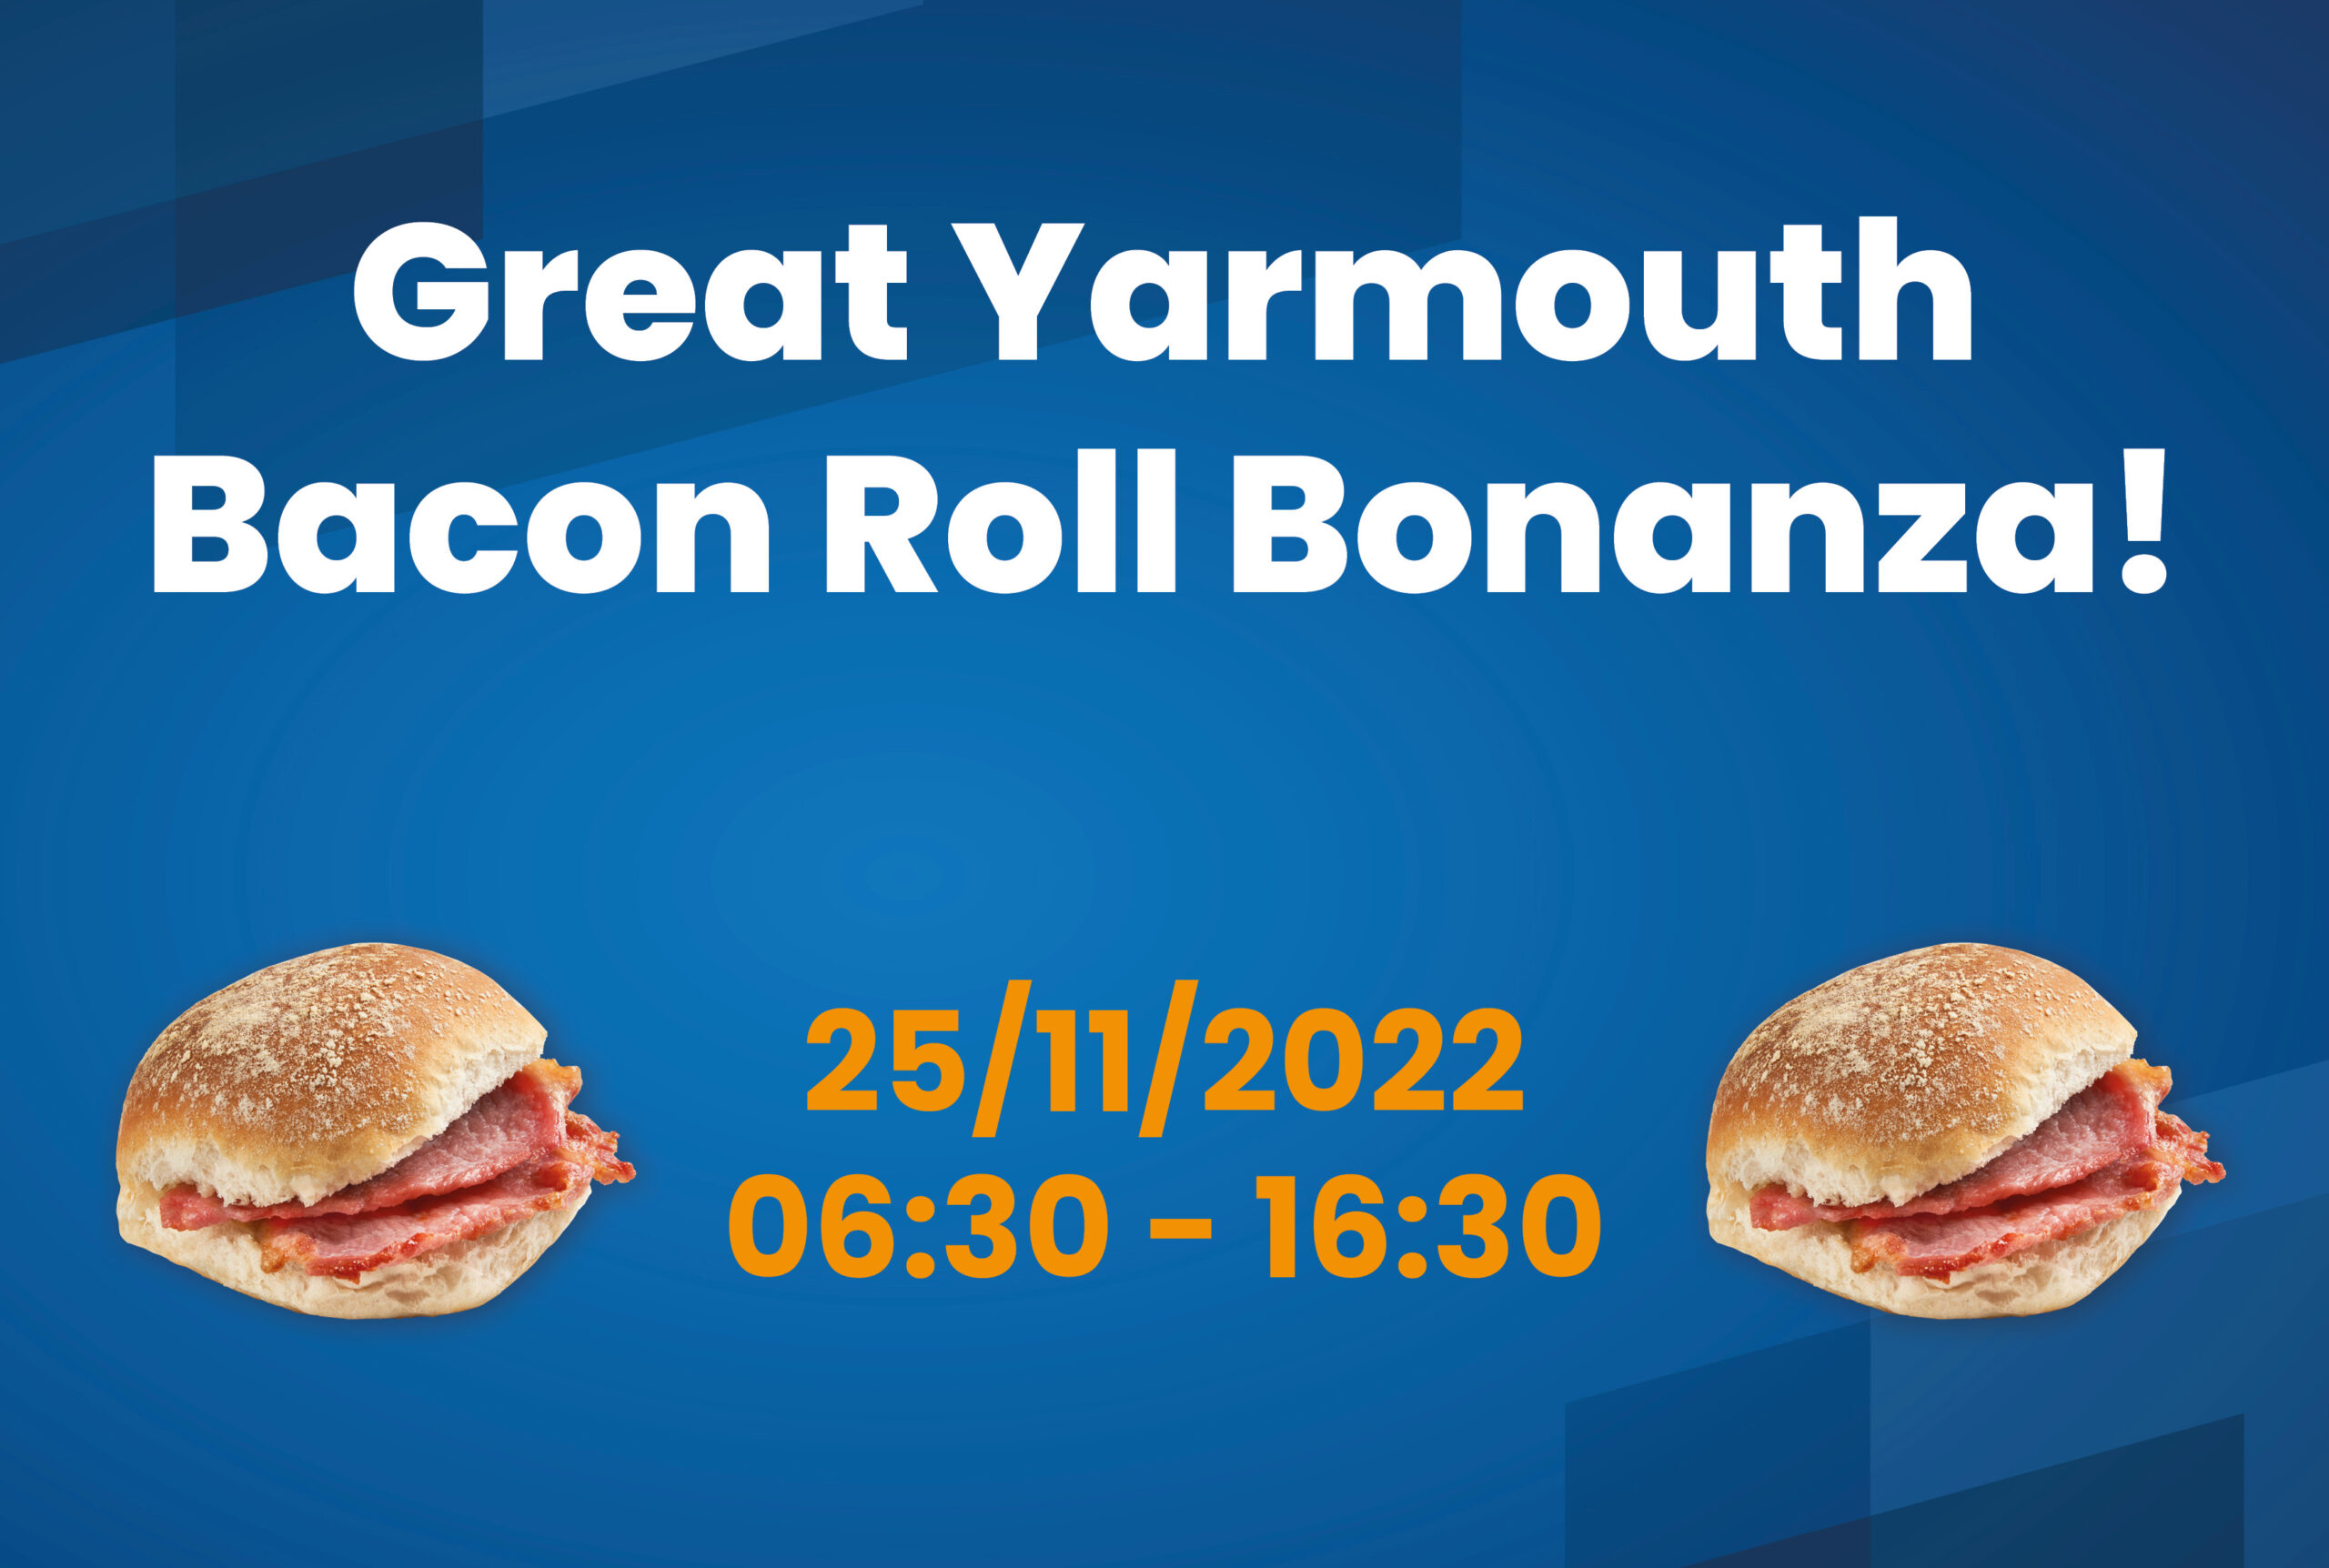 Great Yarmouth Bacon Roll Bonanza